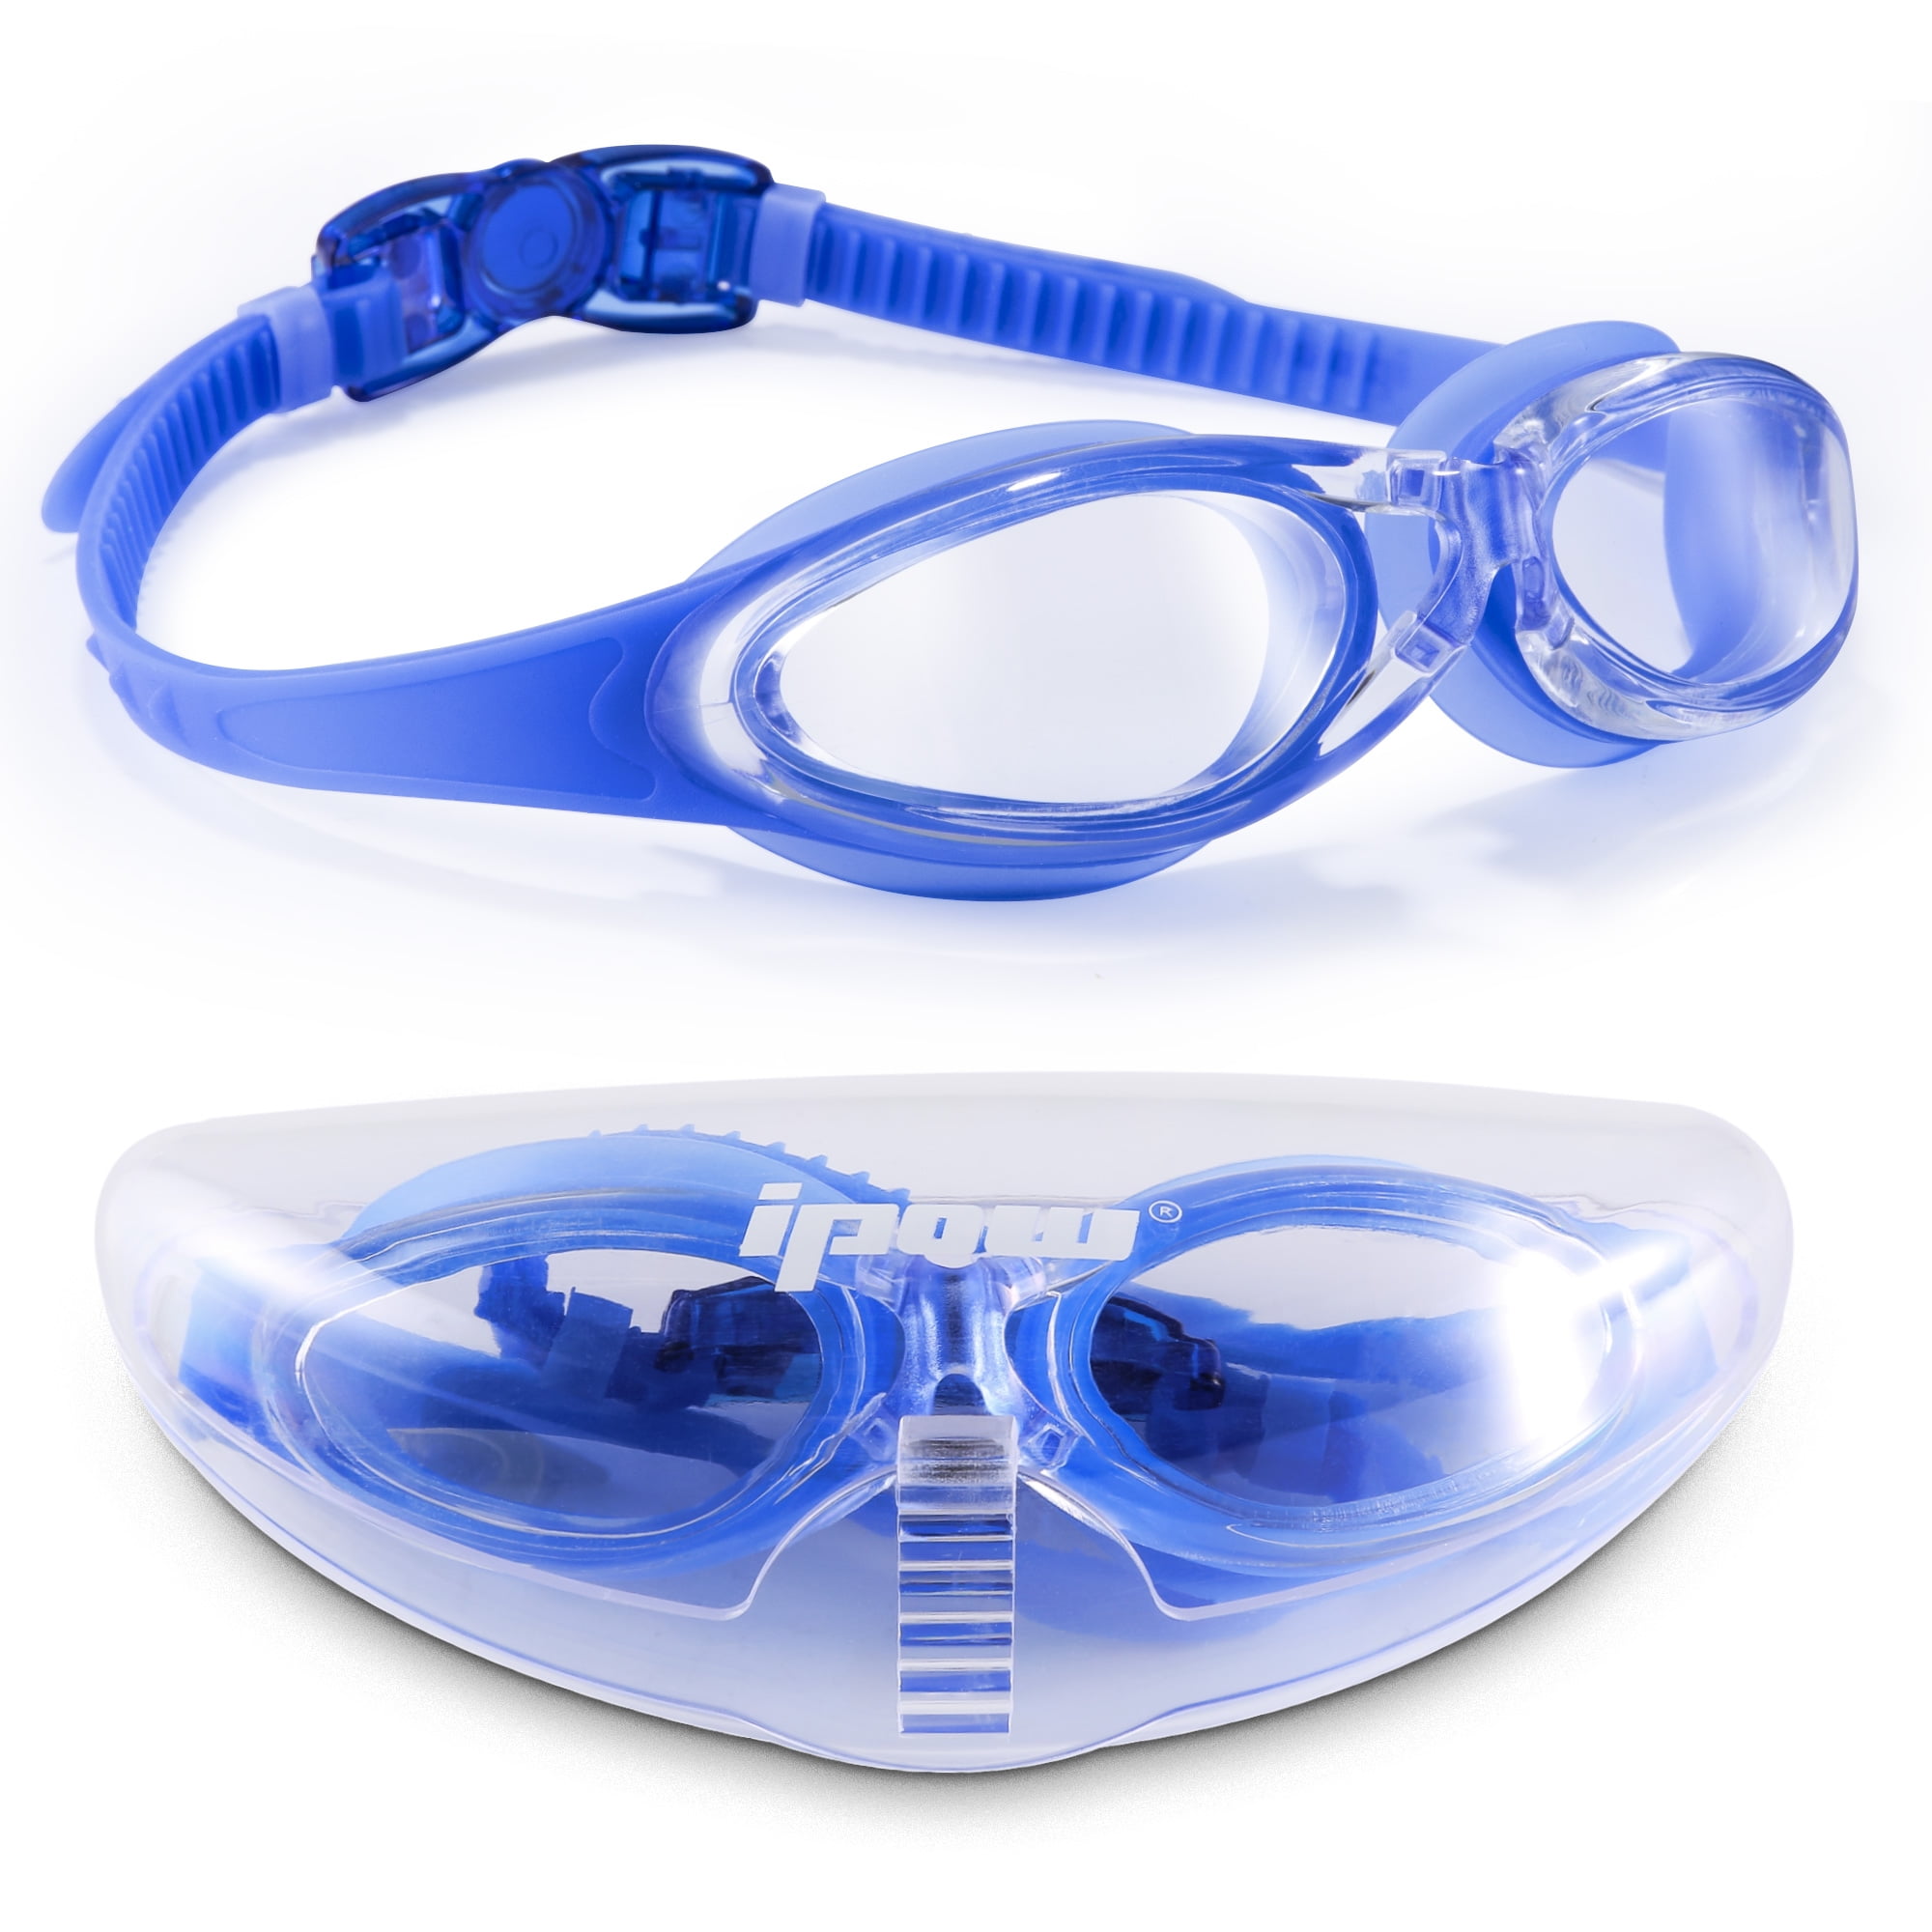 NEW Latex Free Adjustable Straps Blue Adult Swim Goggles 